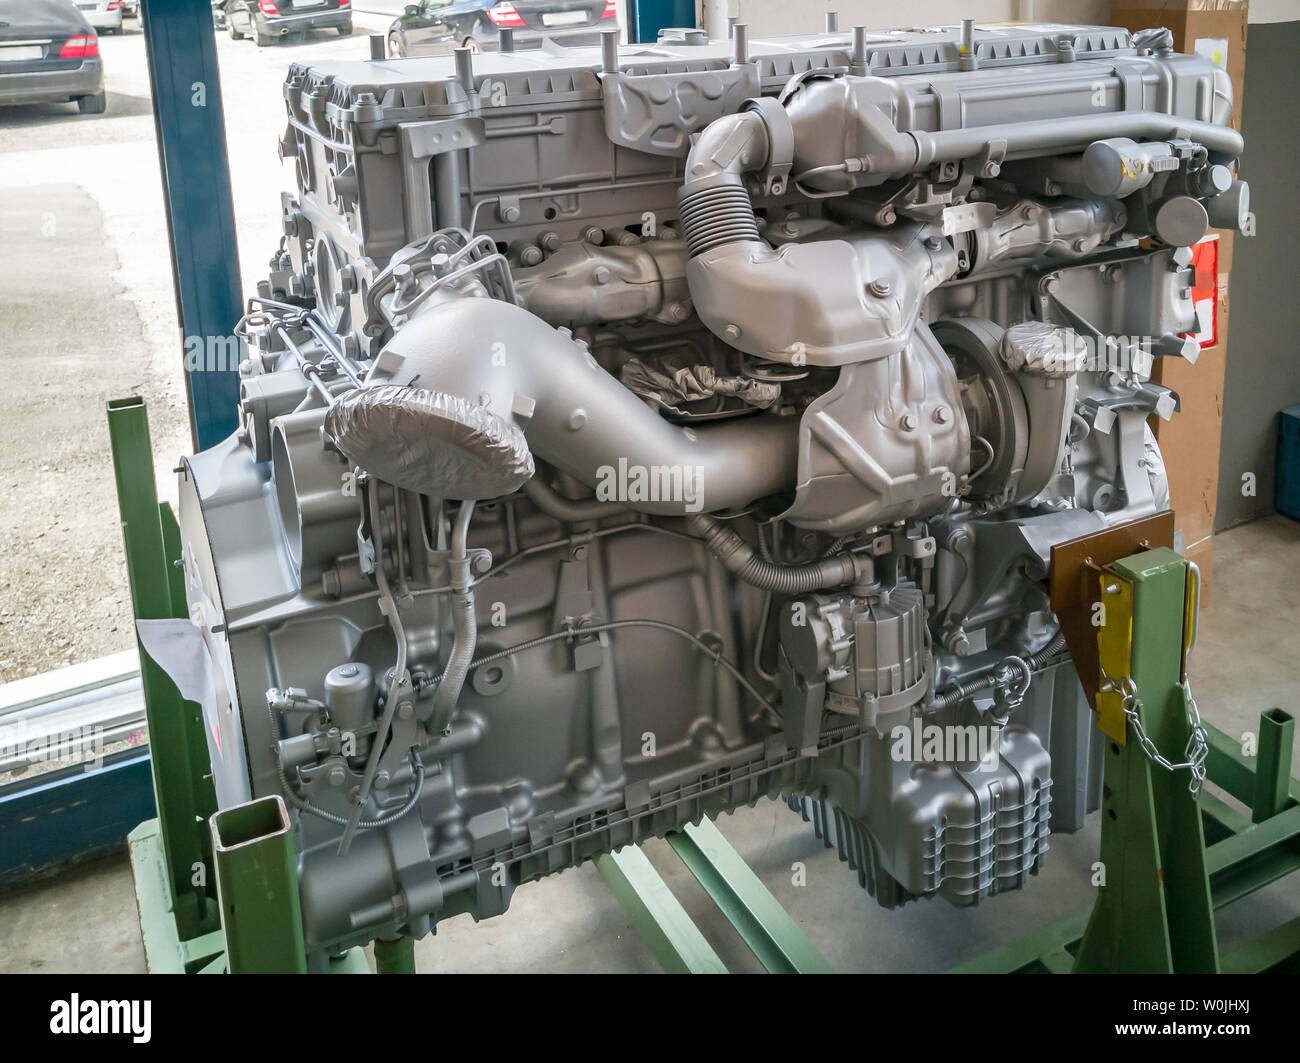 Neue lkw-Diesel Motor ausgebaut Stockfotografie - Alamy